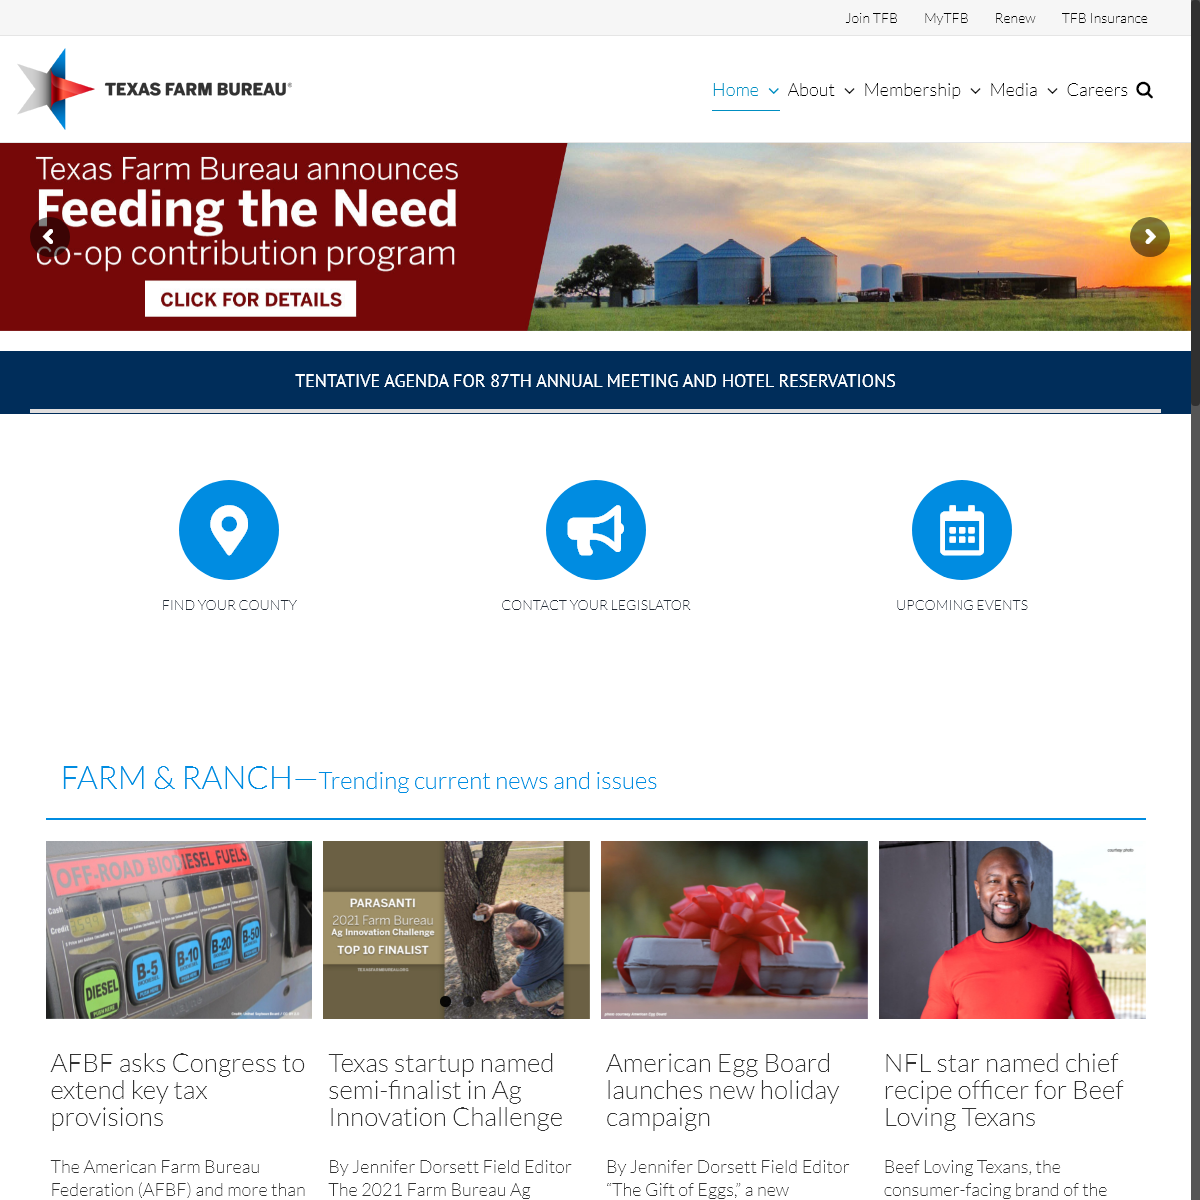 Home - Texas Farm Bureau